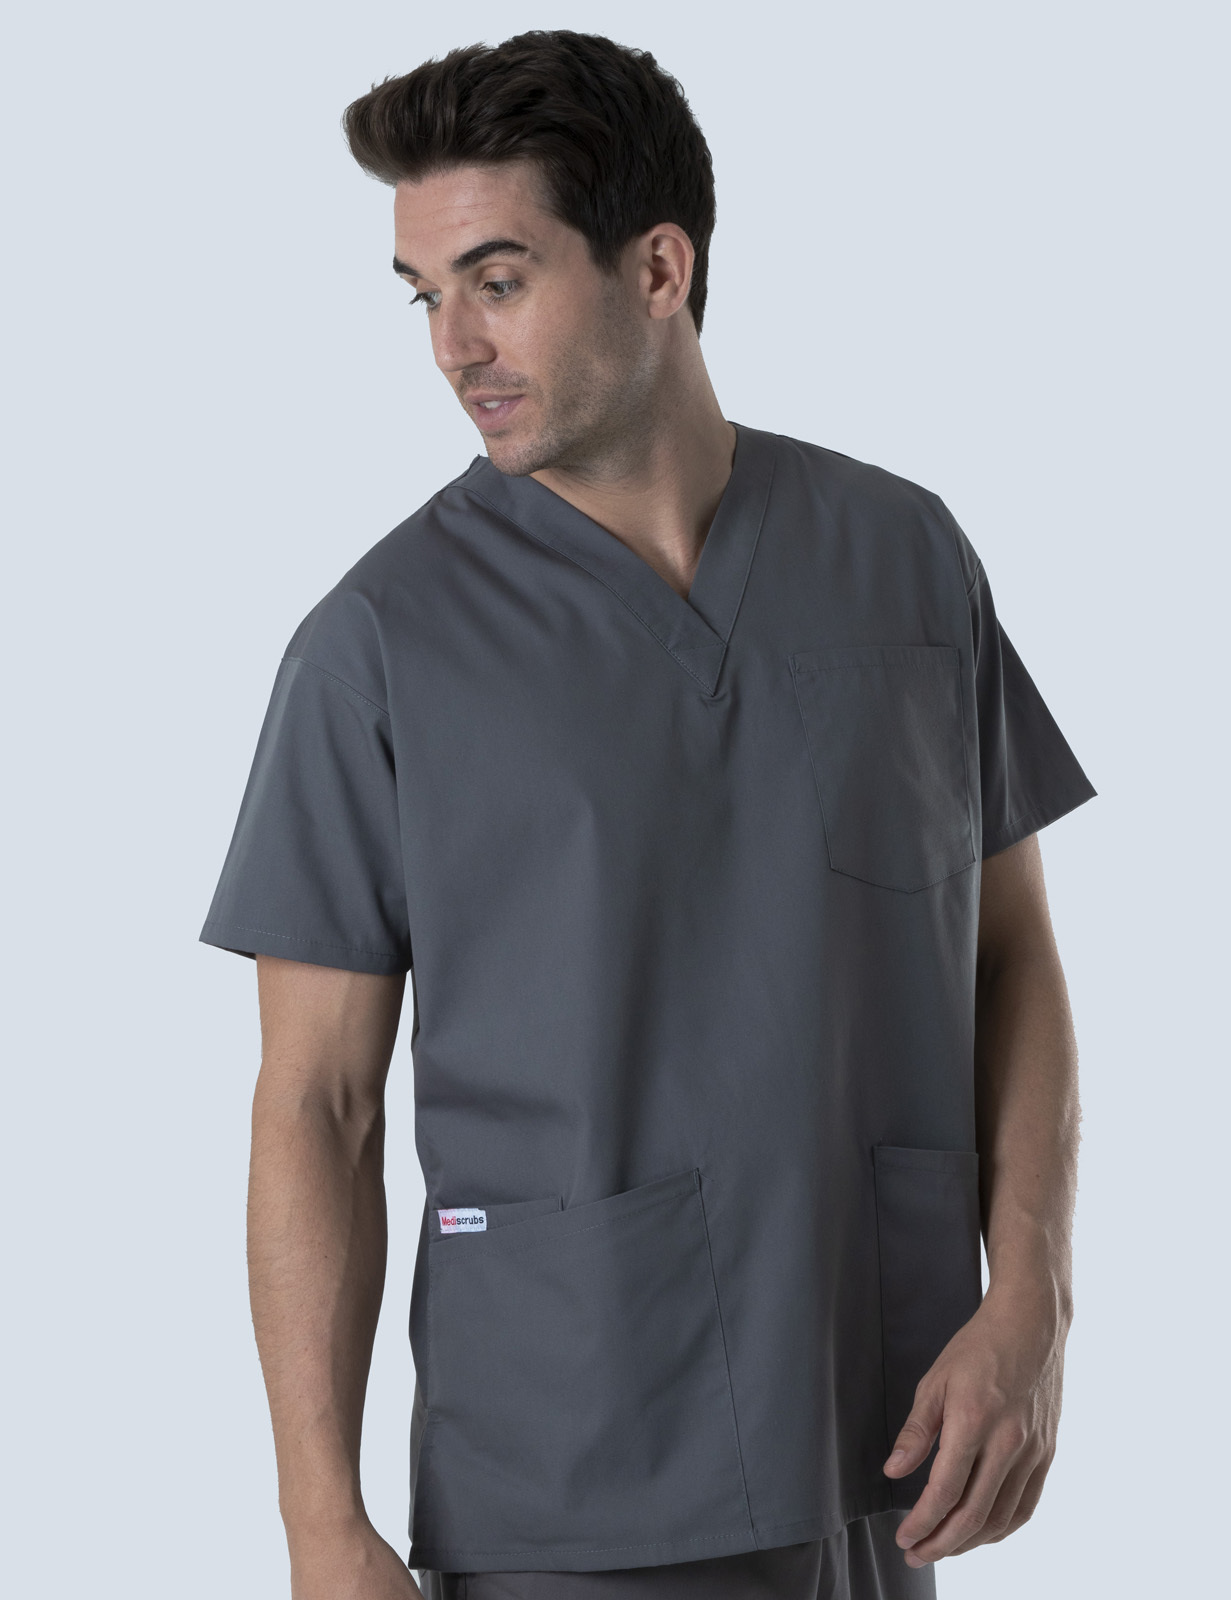 Rockhampton Base Hospital - ED CN (4 Pocket Scrub Top and Cargo Pants in Steel Grey incl Logos)